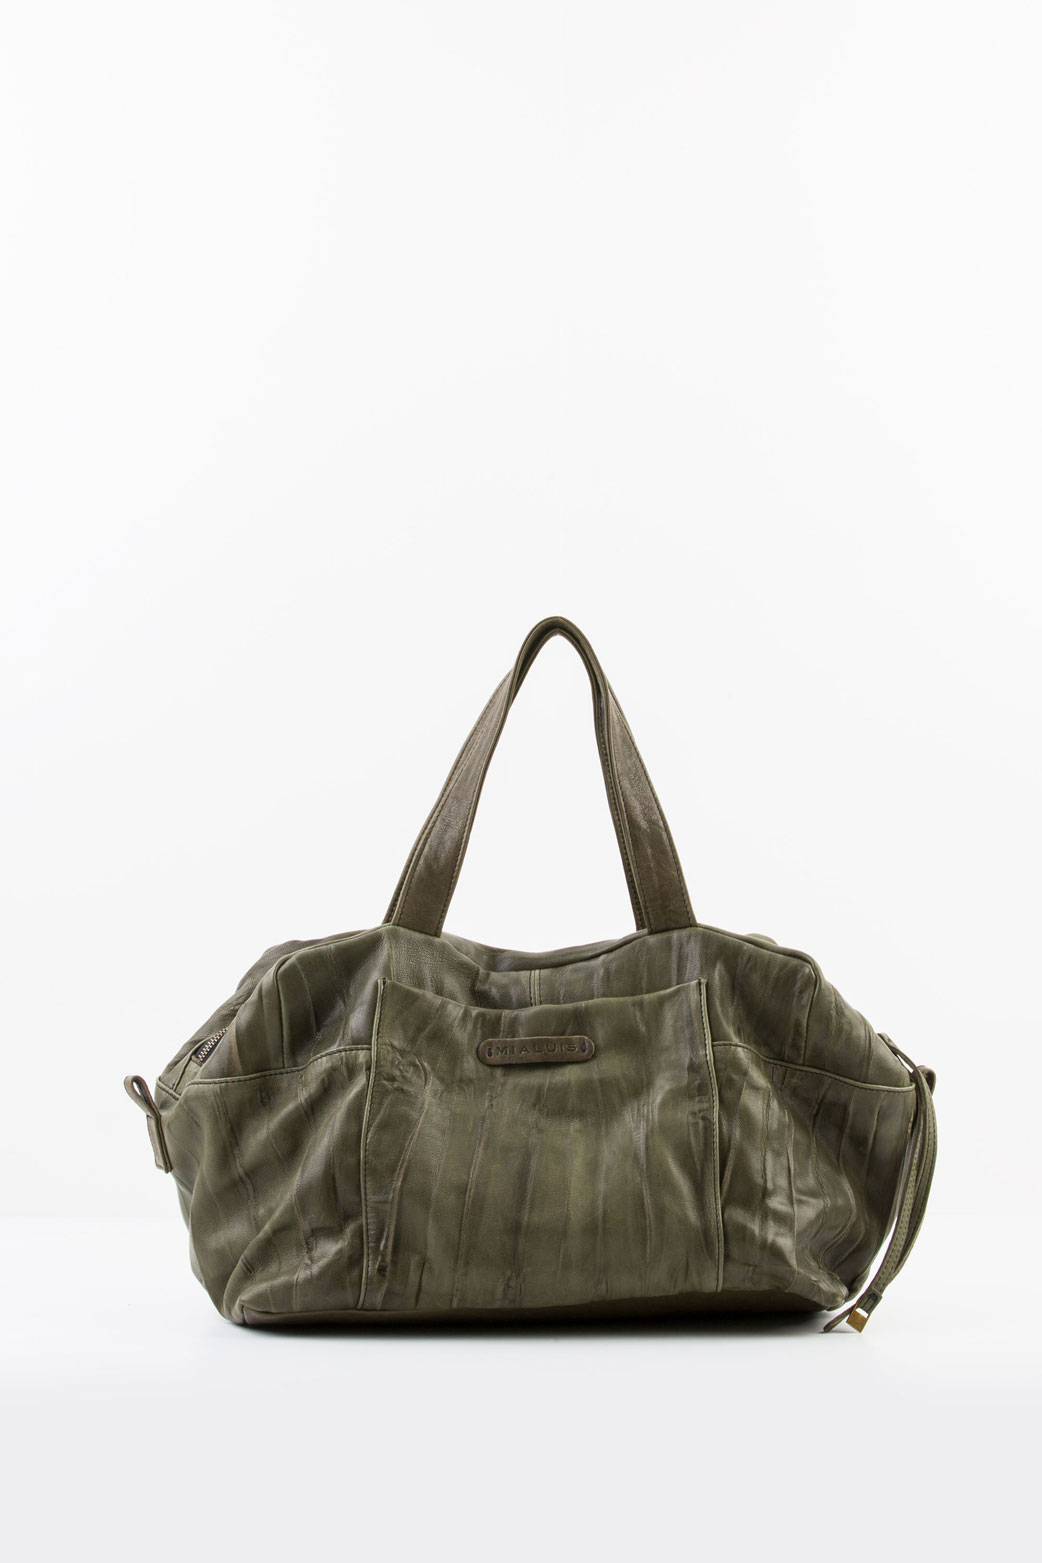 cri-leather-green-pleated-bag-soft-light-shoulder-shopping-bag-mialuis-matchboxathens